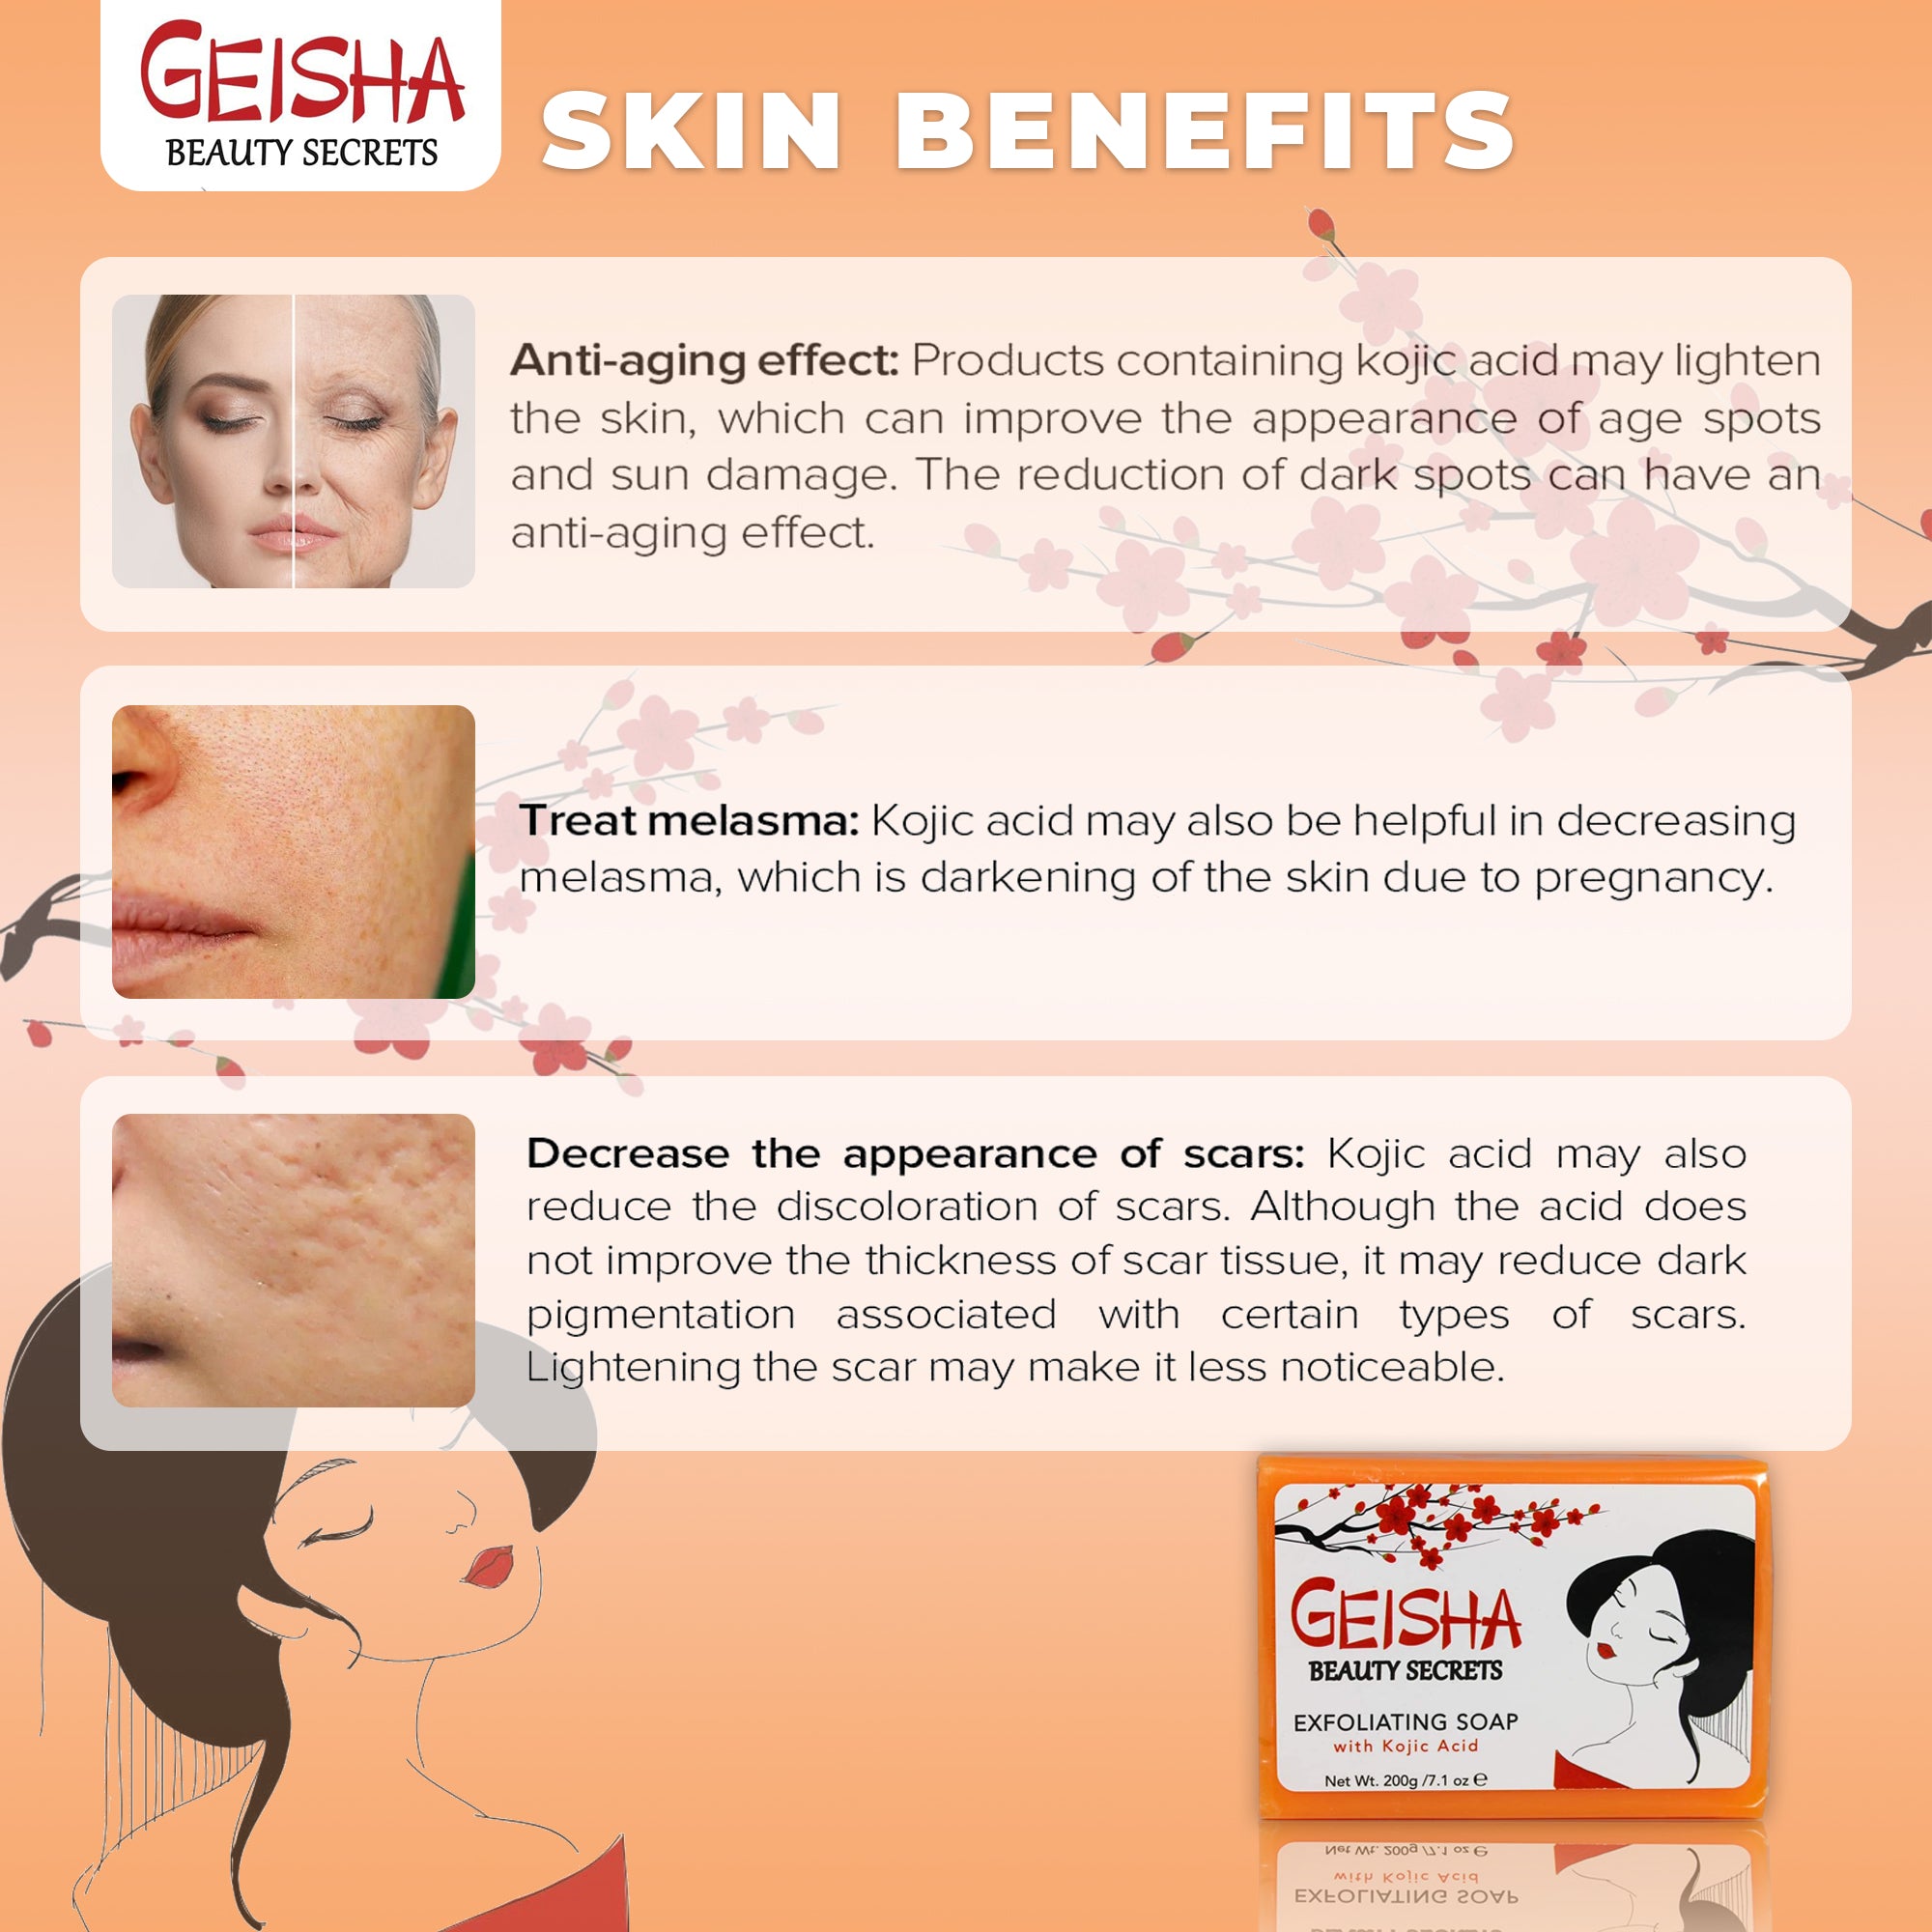 Geisha Beauty Secrets Exfoliating Soap with Kojic Acid - 200g / 7.1 oz Mitchell Brands - Mitchell Brands - Skin Lightening, Skin Brightening, Fade Dark Spots, Shea Butter, Hair Growth Products